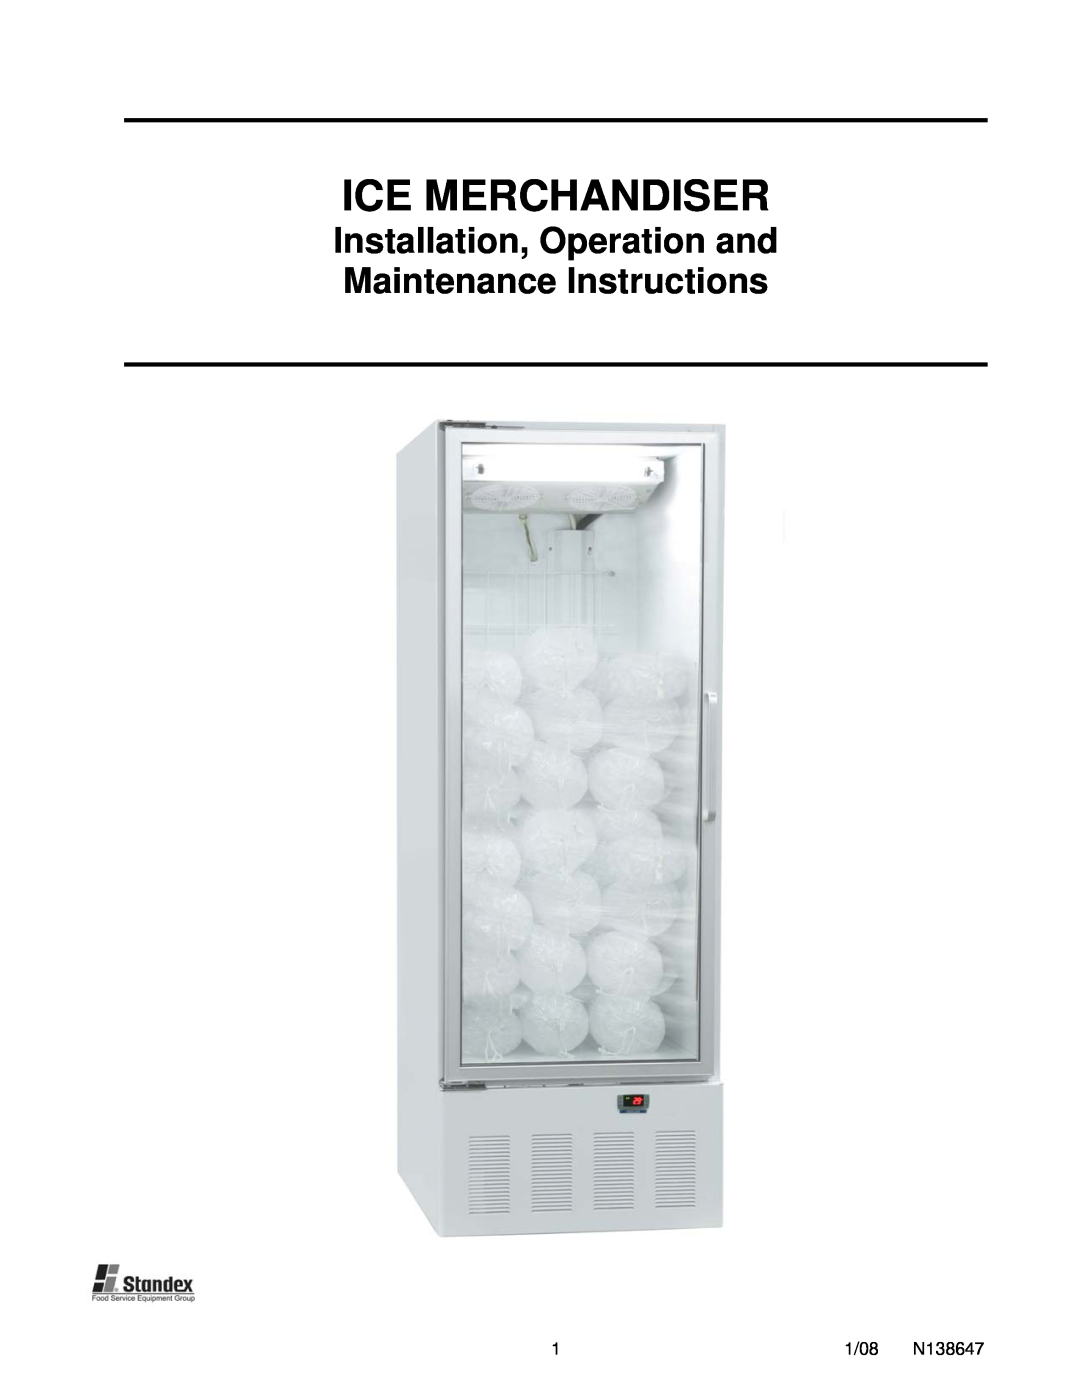 Master Bilt Ice Merchandiser manual Installation, Operation and, Maintenance Instructions, 1/08, N138647 